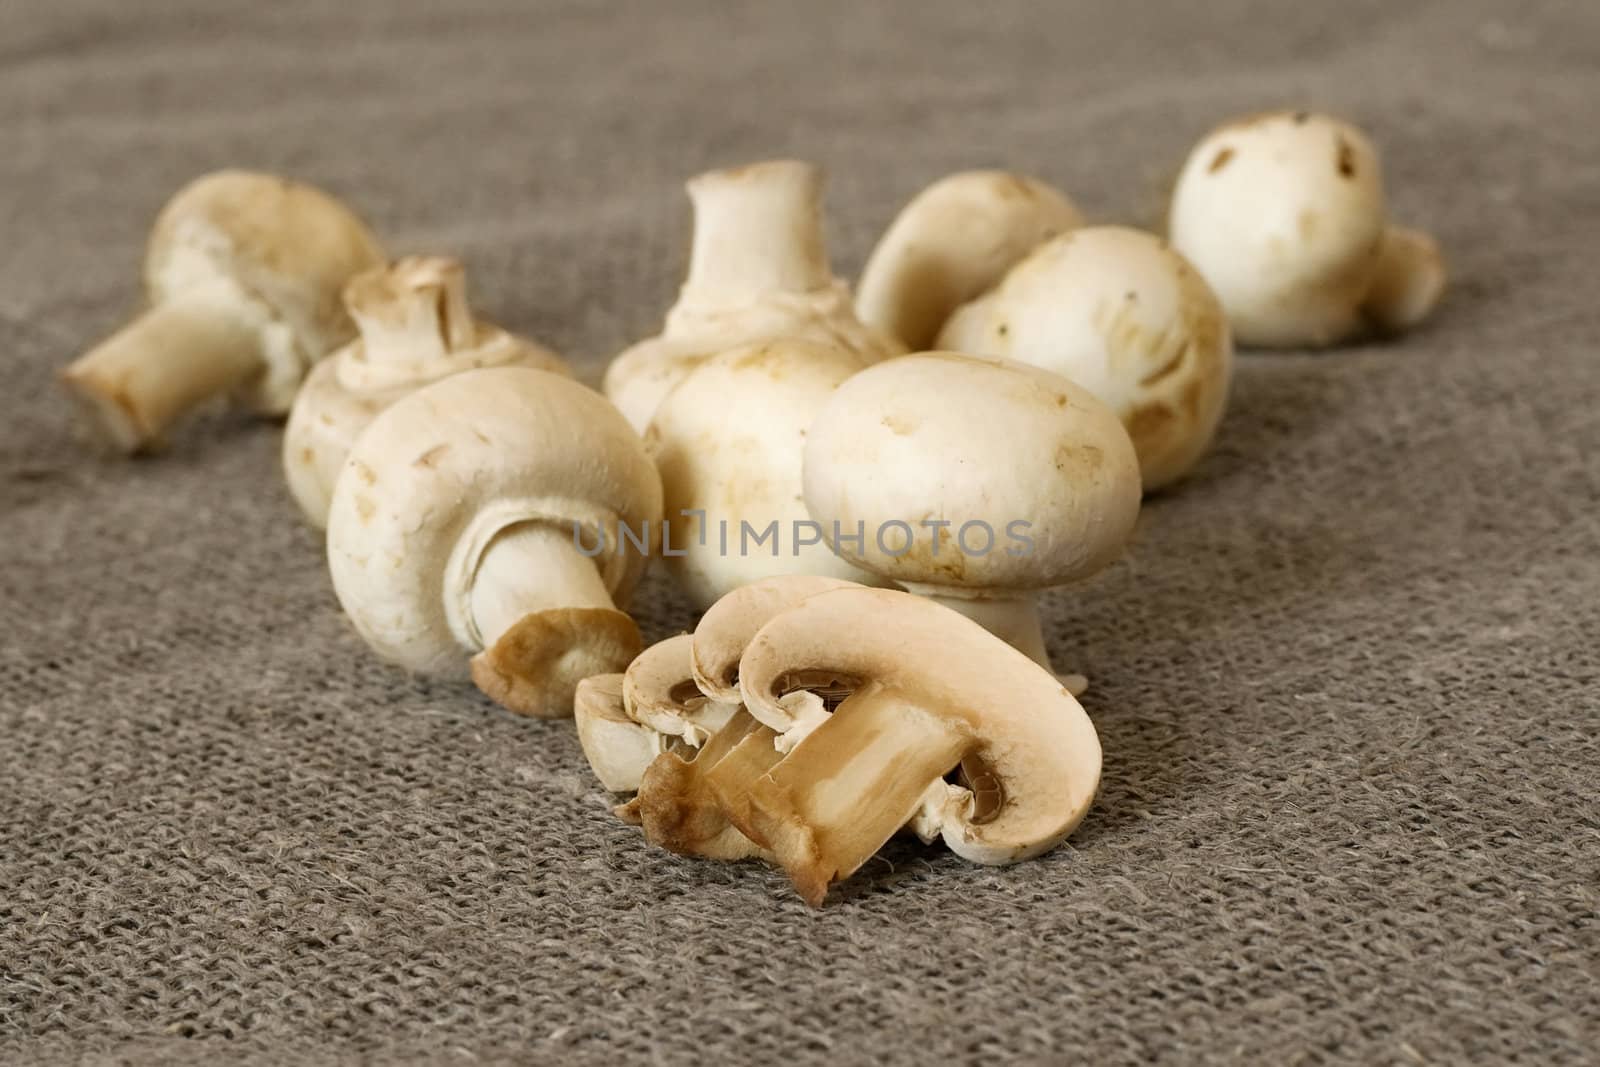 table mushrooms, sliced, close-up, shot on textile background